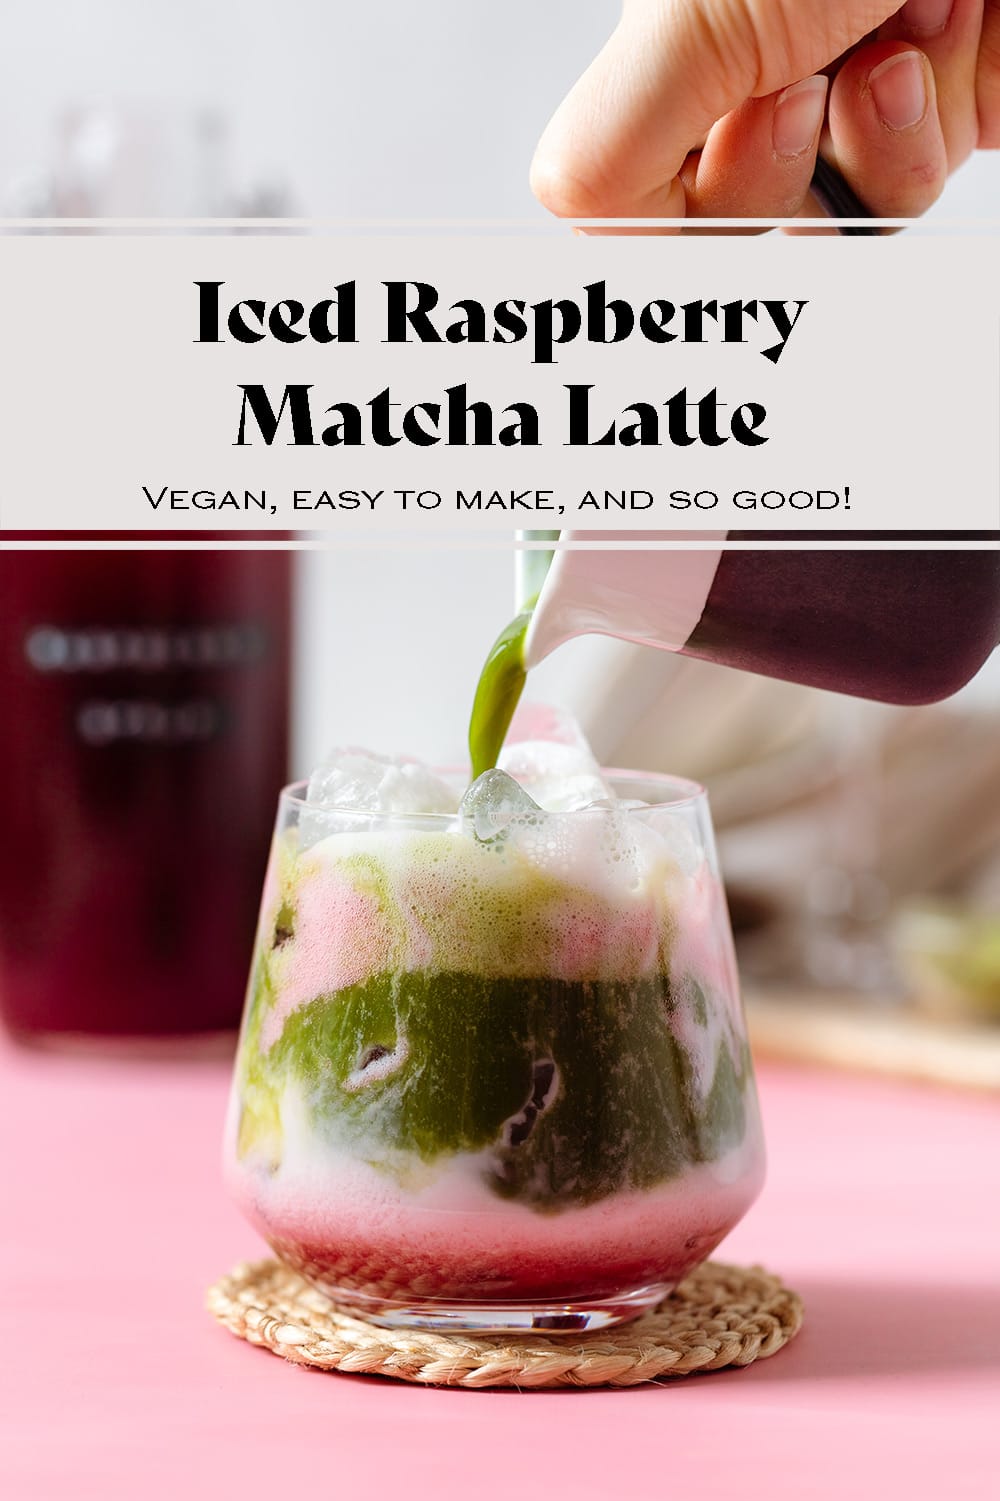 Iced Raspberry Matcha Latte